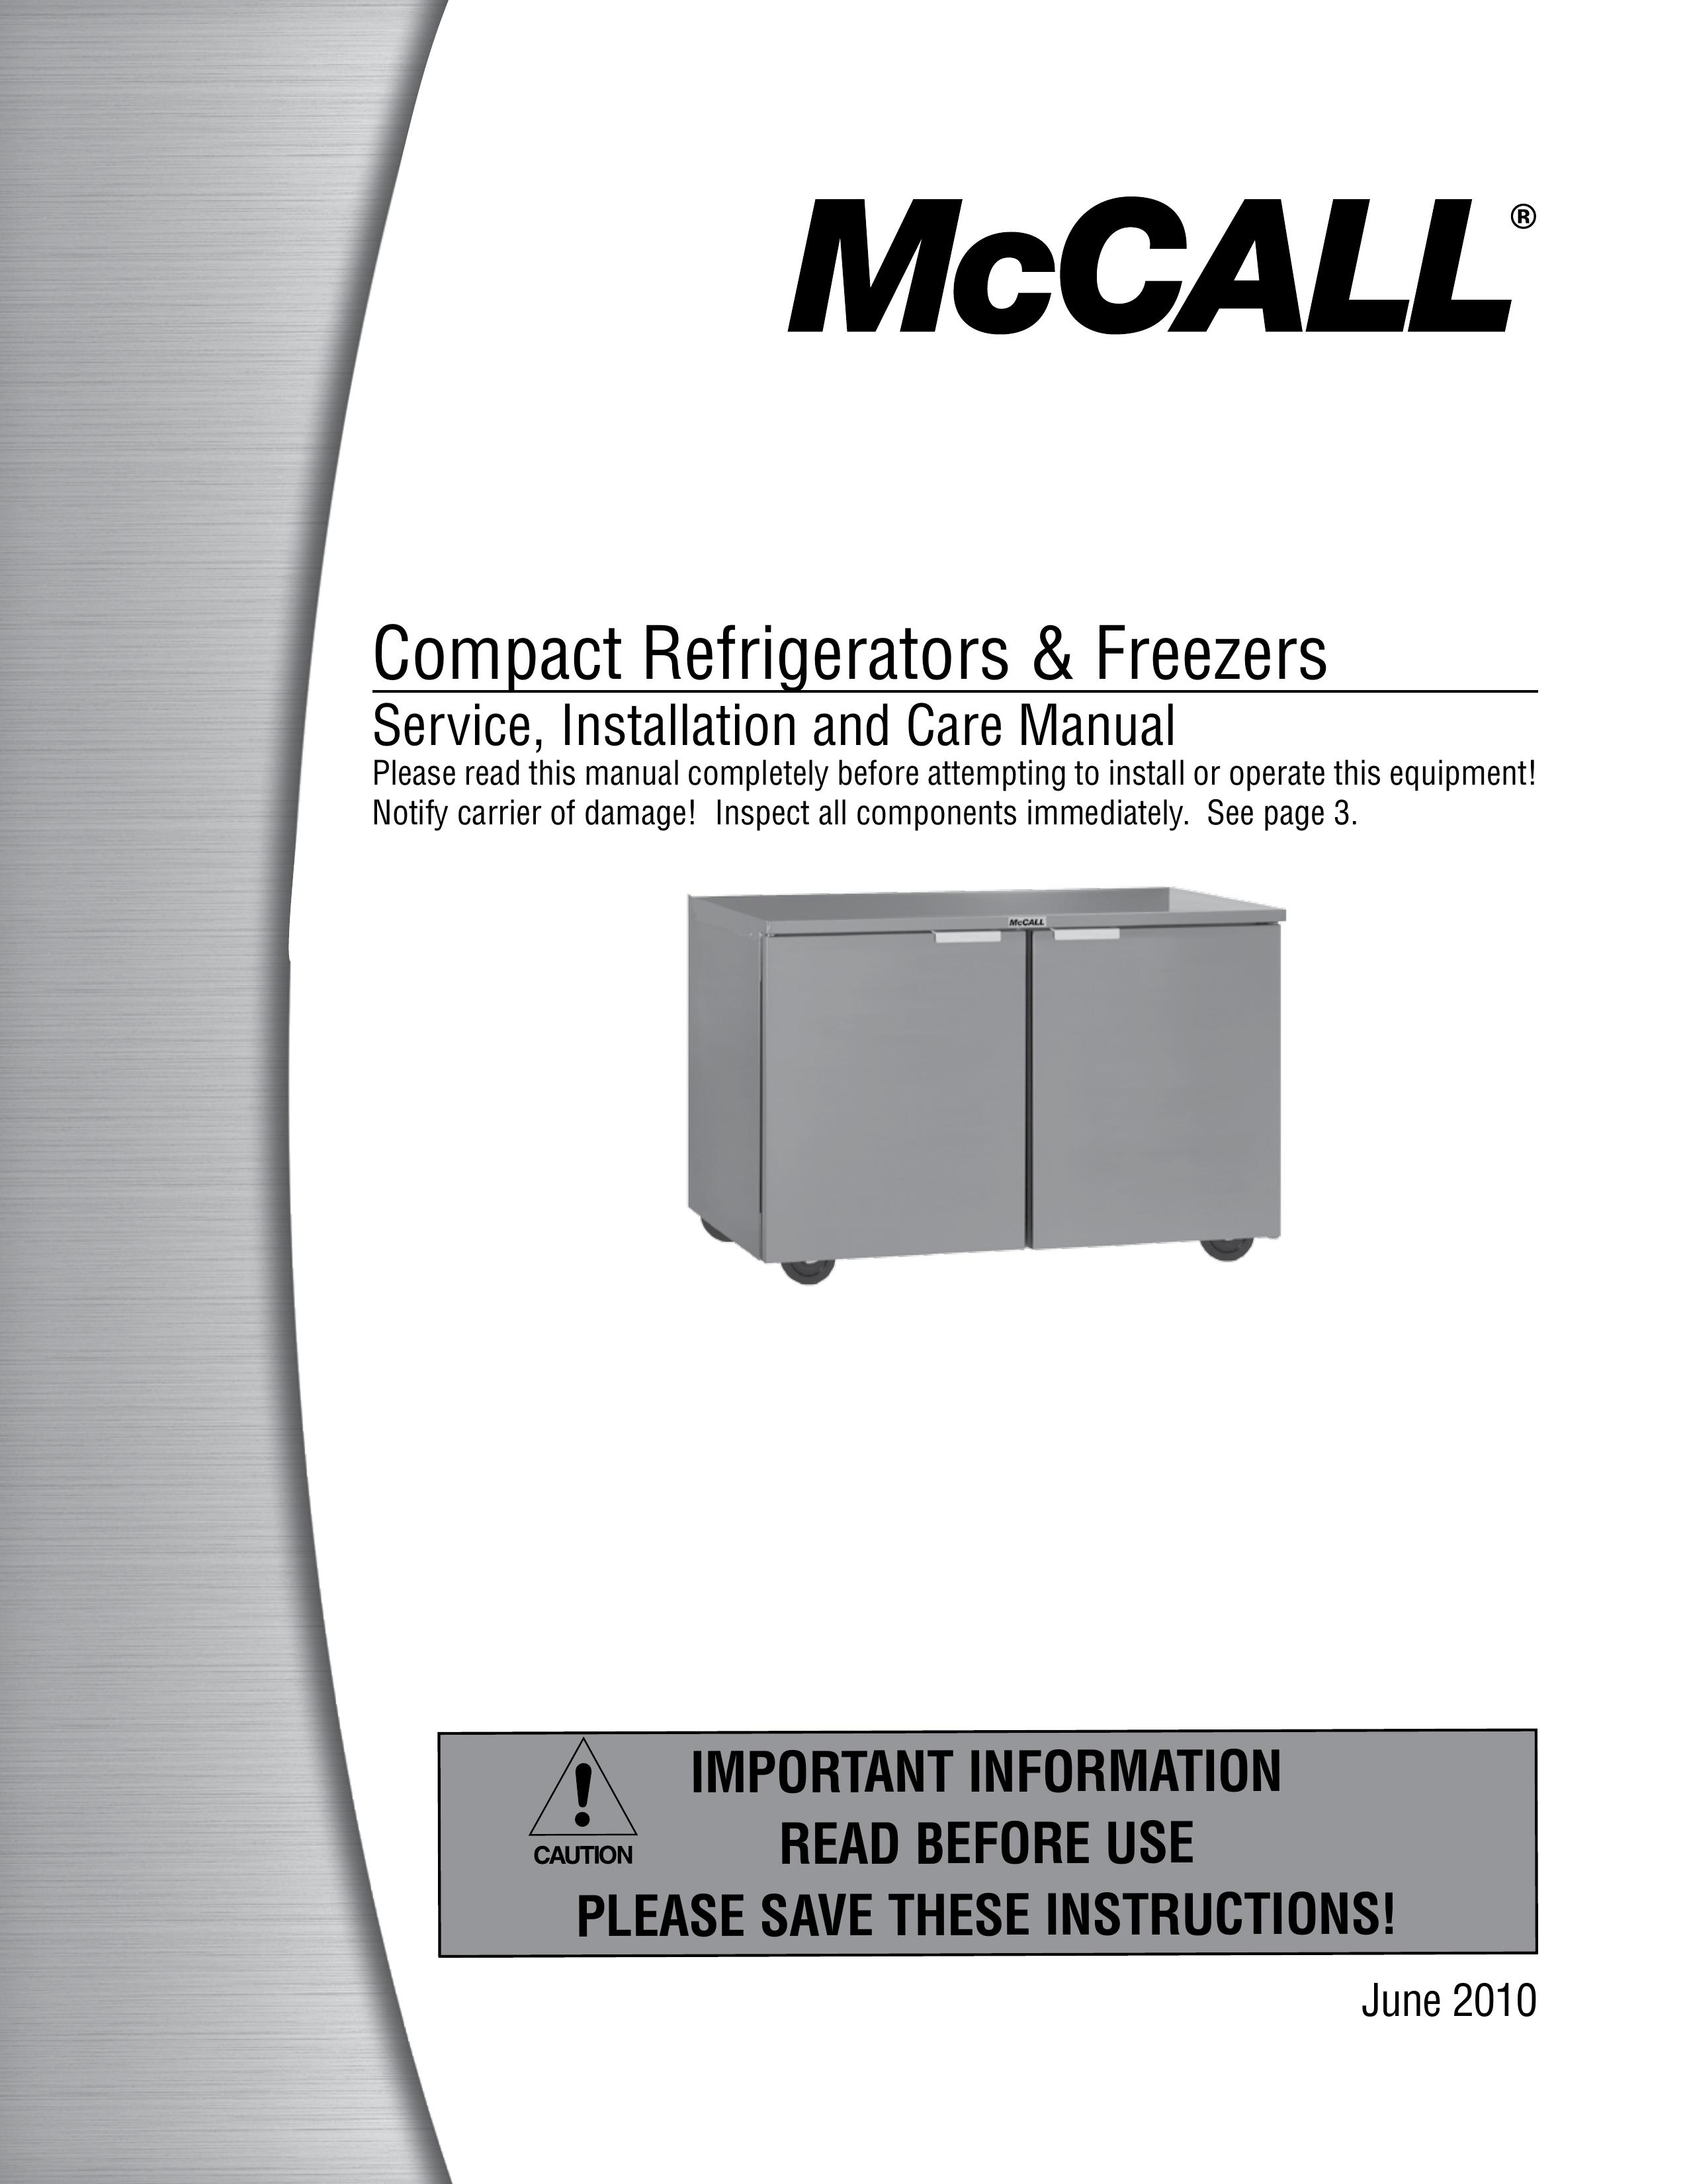 McCall Refrigeration MCCSTR48 Refrigerator User Manual